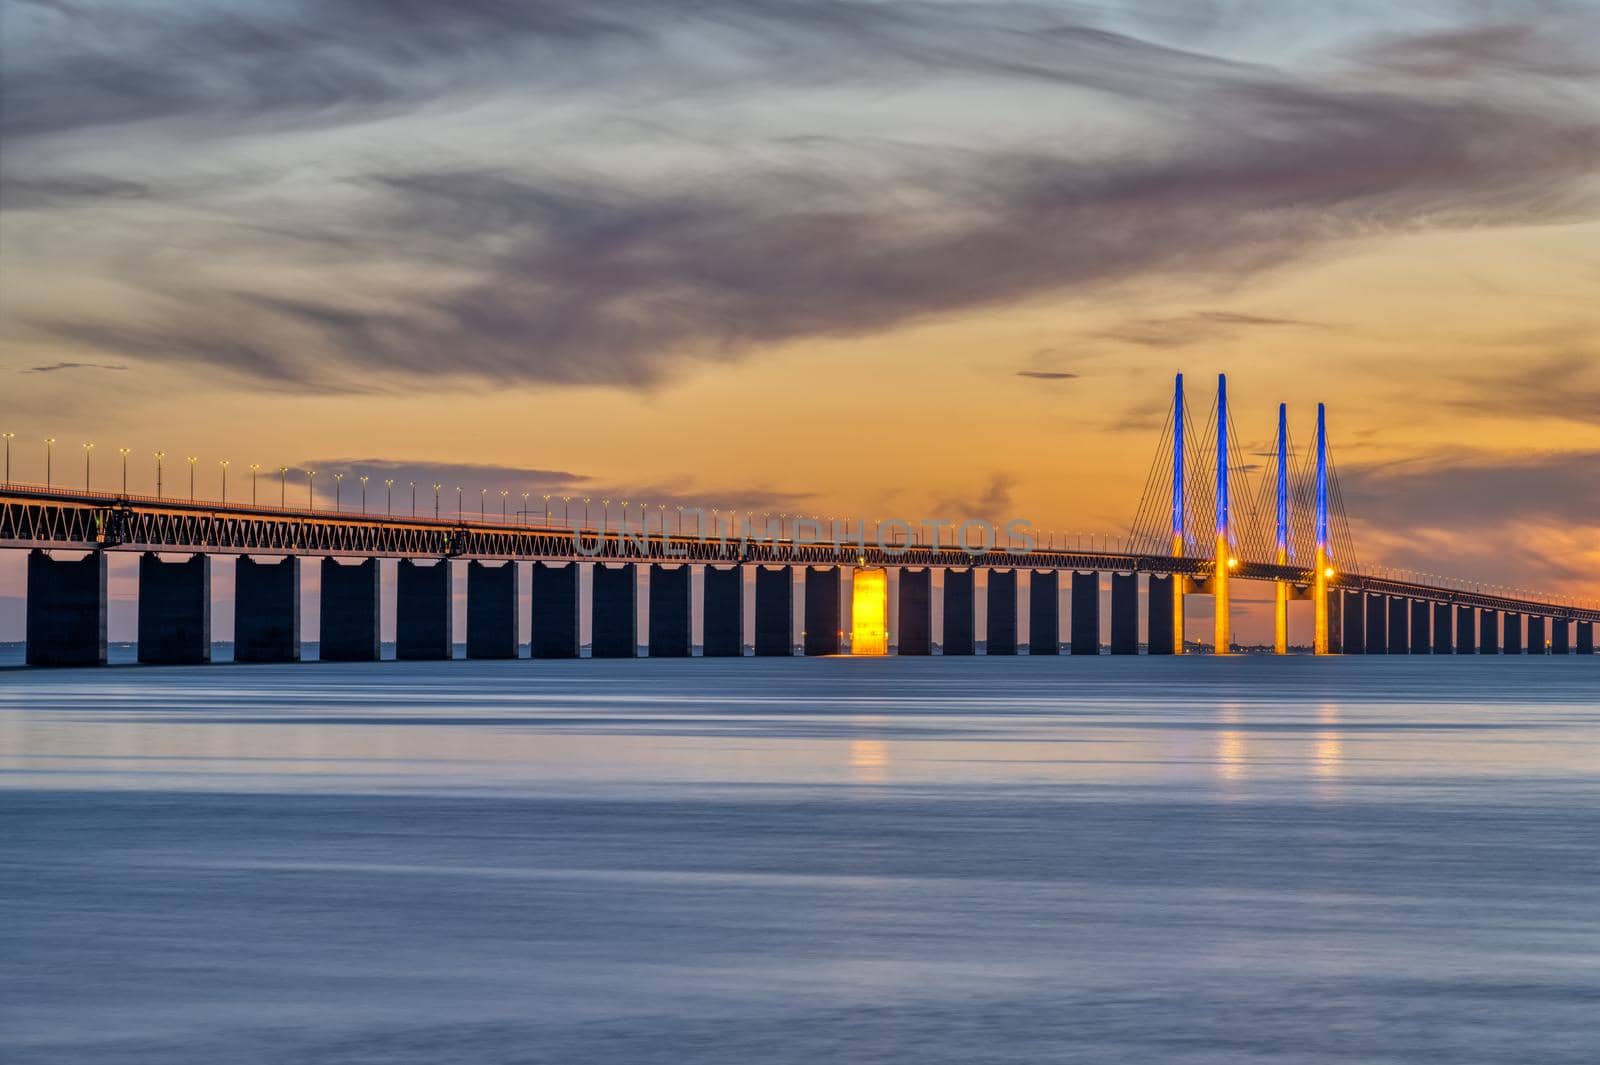 The Oresund bridge between Denmark and Sweden after sunset